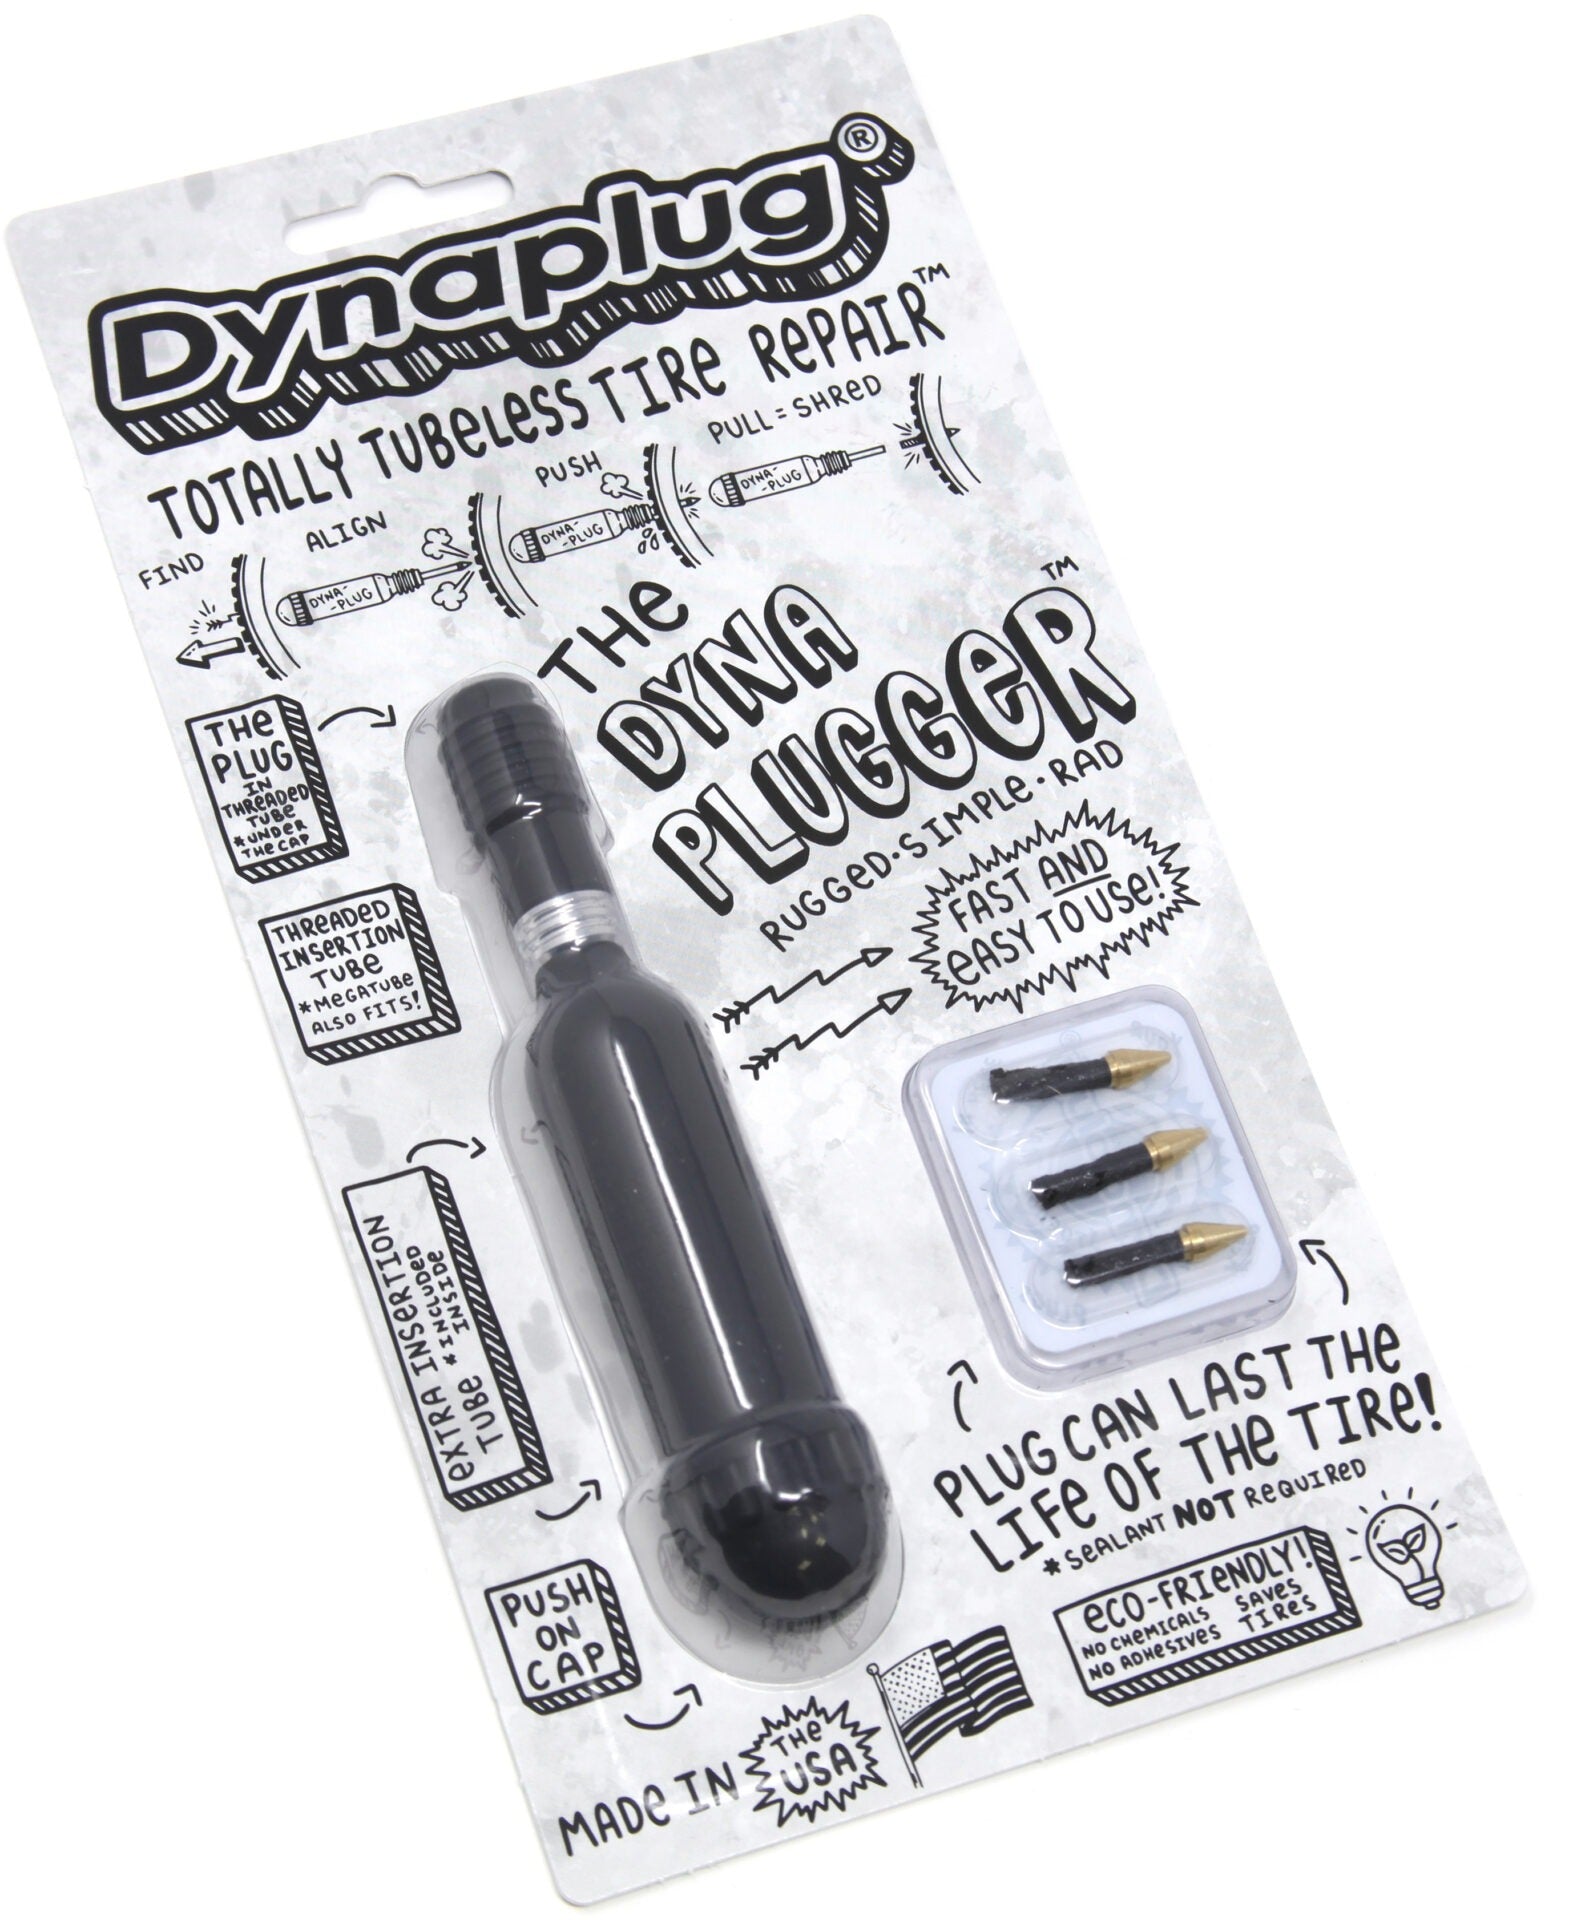 Dynaplug Dynaplugger Tubeless Rep. Kit + Stan's sealant BUNDLE (Sort)